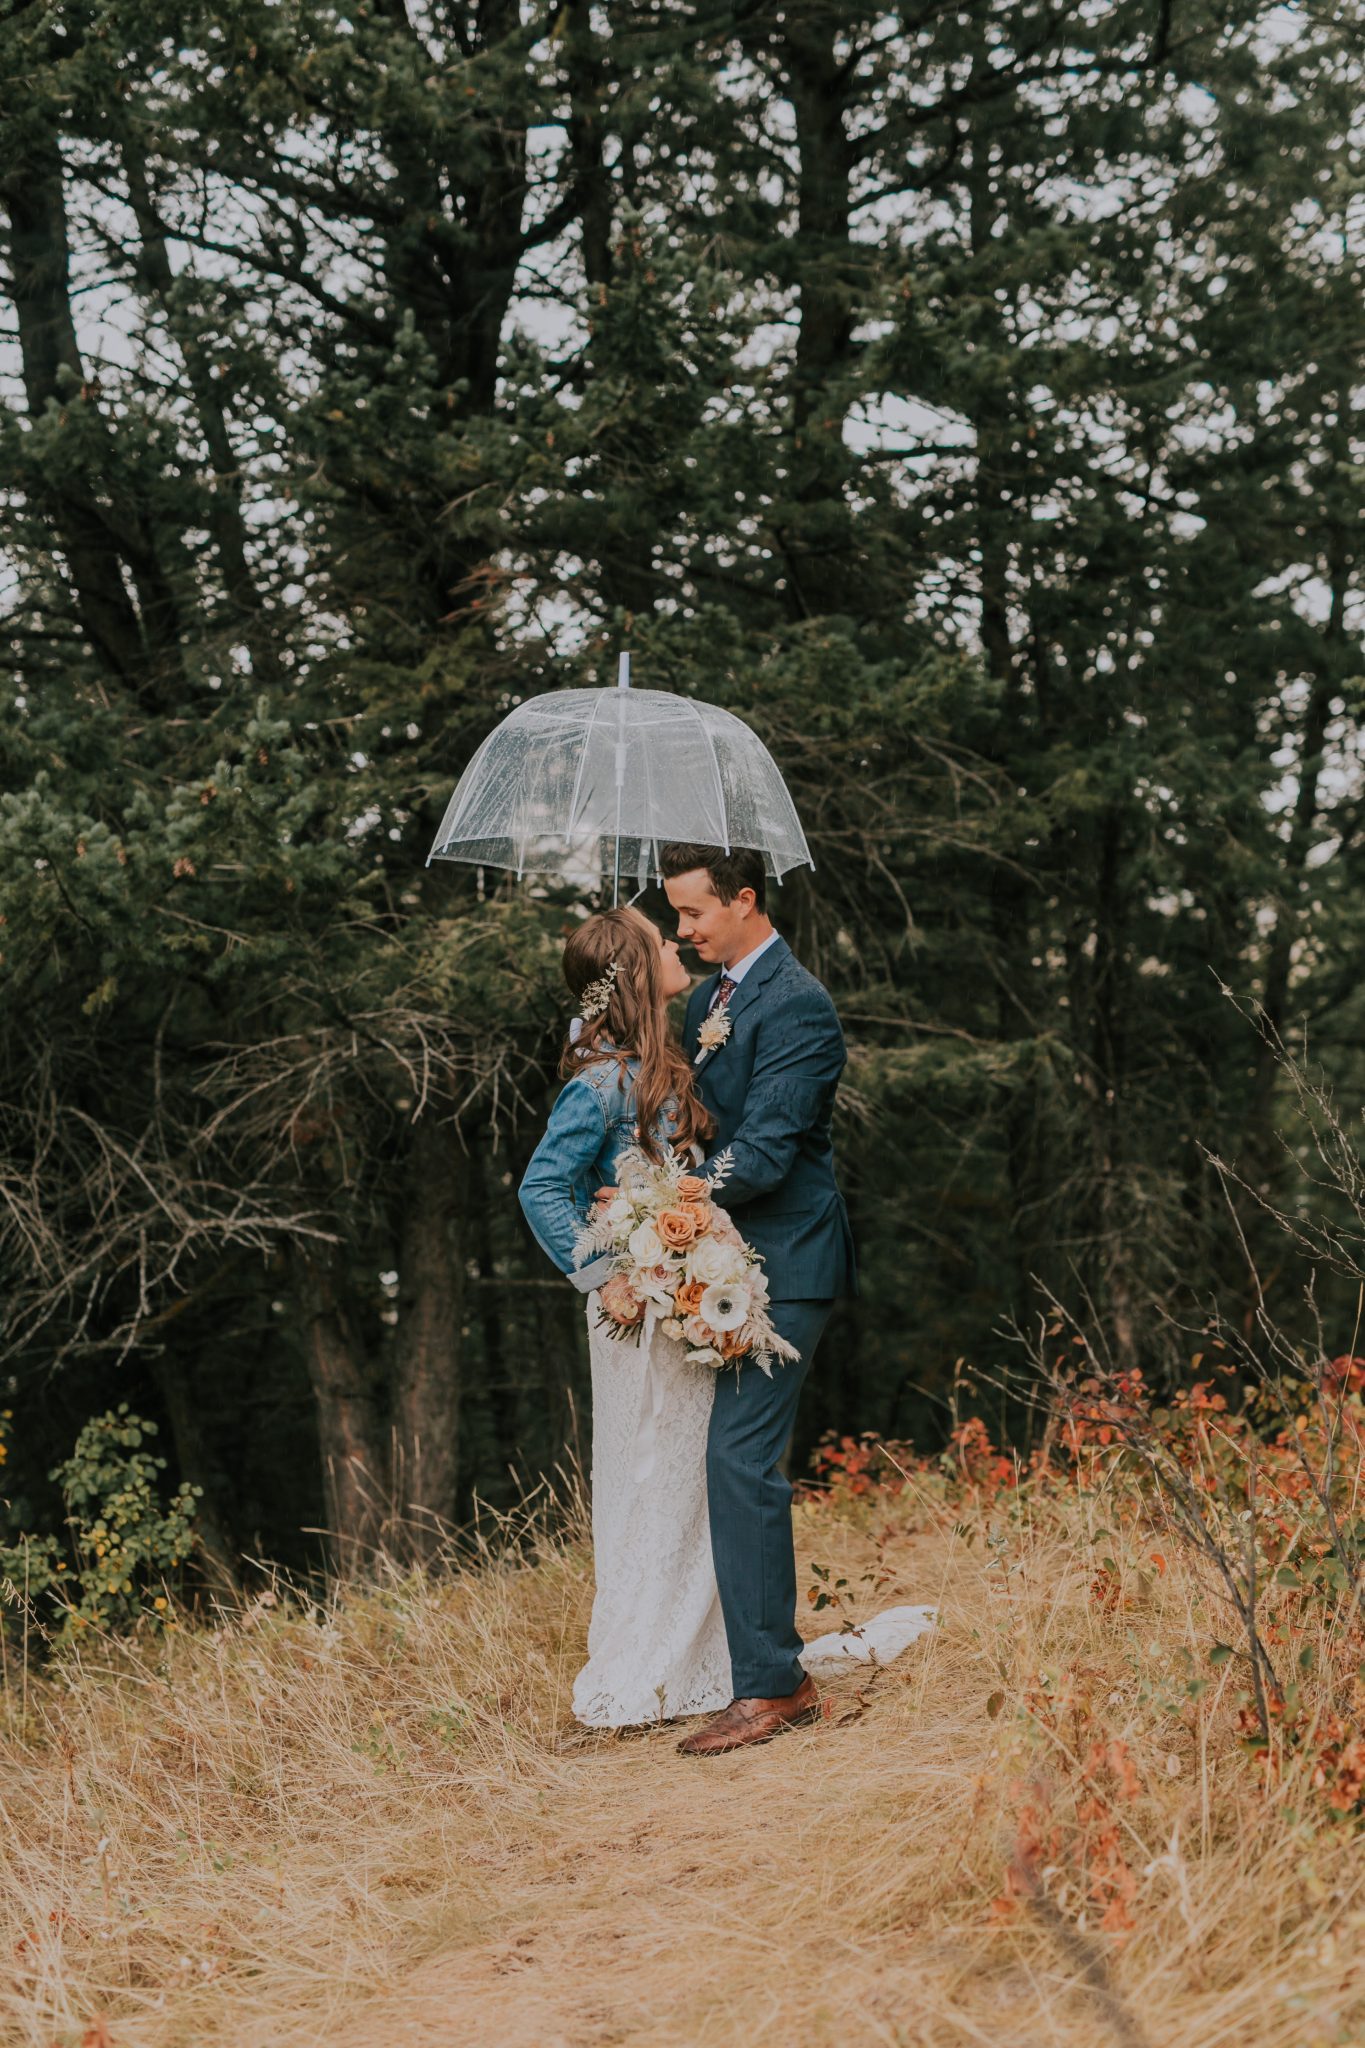 Romantic wedding in the rain, clear umbrella, jean jacket